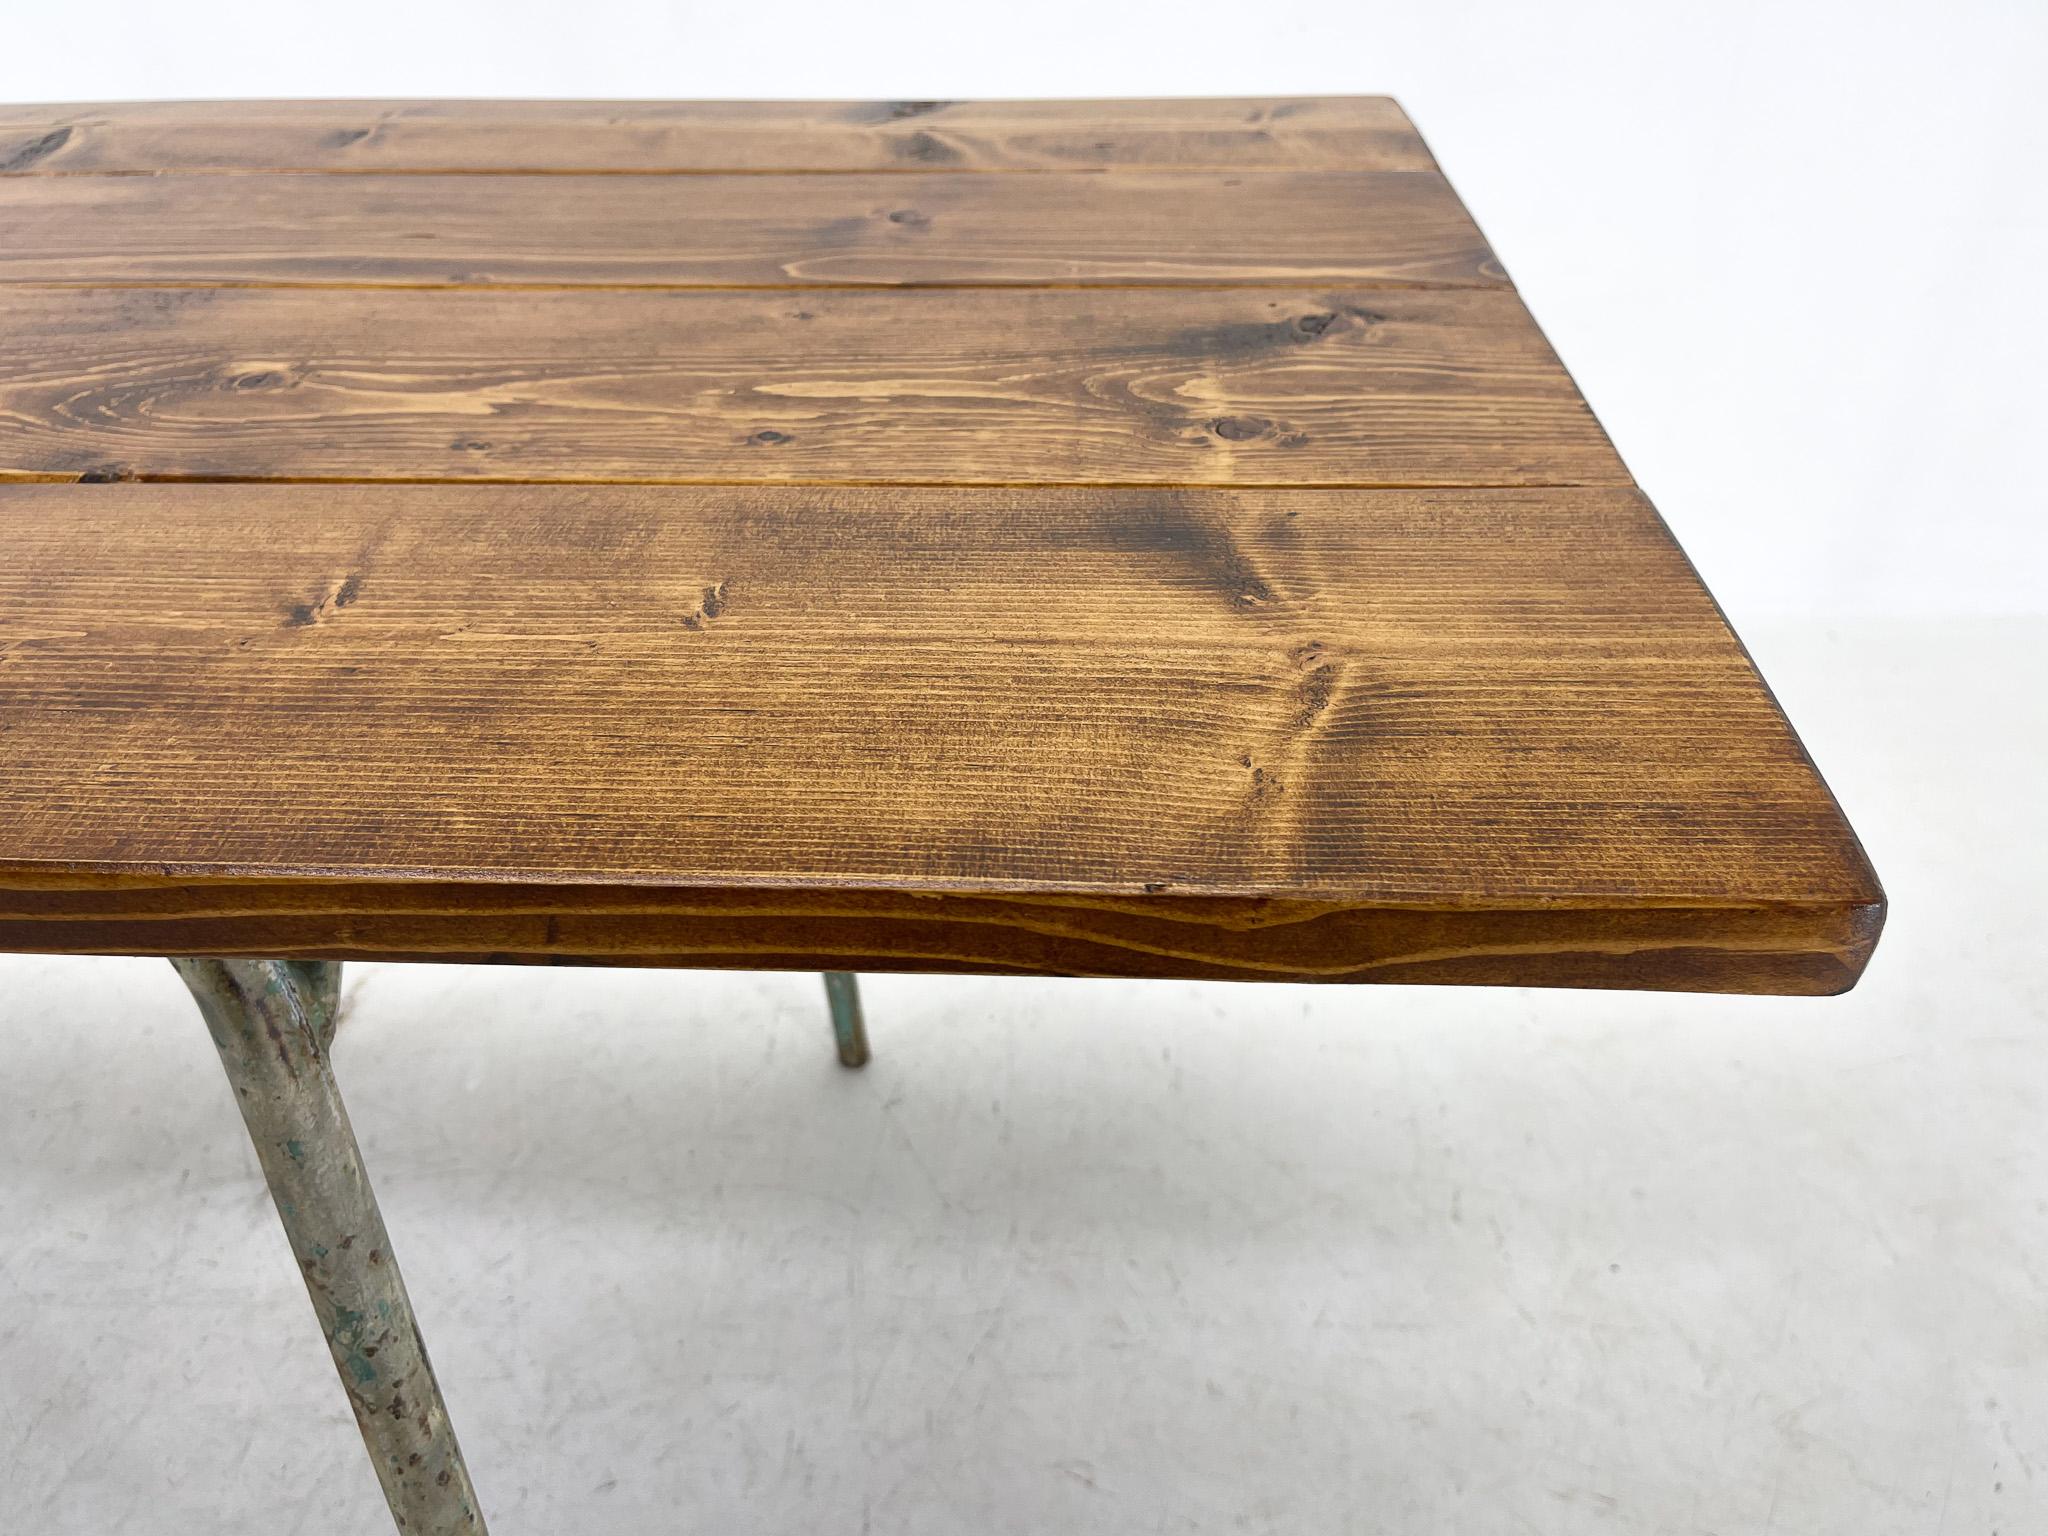 Vintage Indrustrial Wood & Metal Dining Table 1